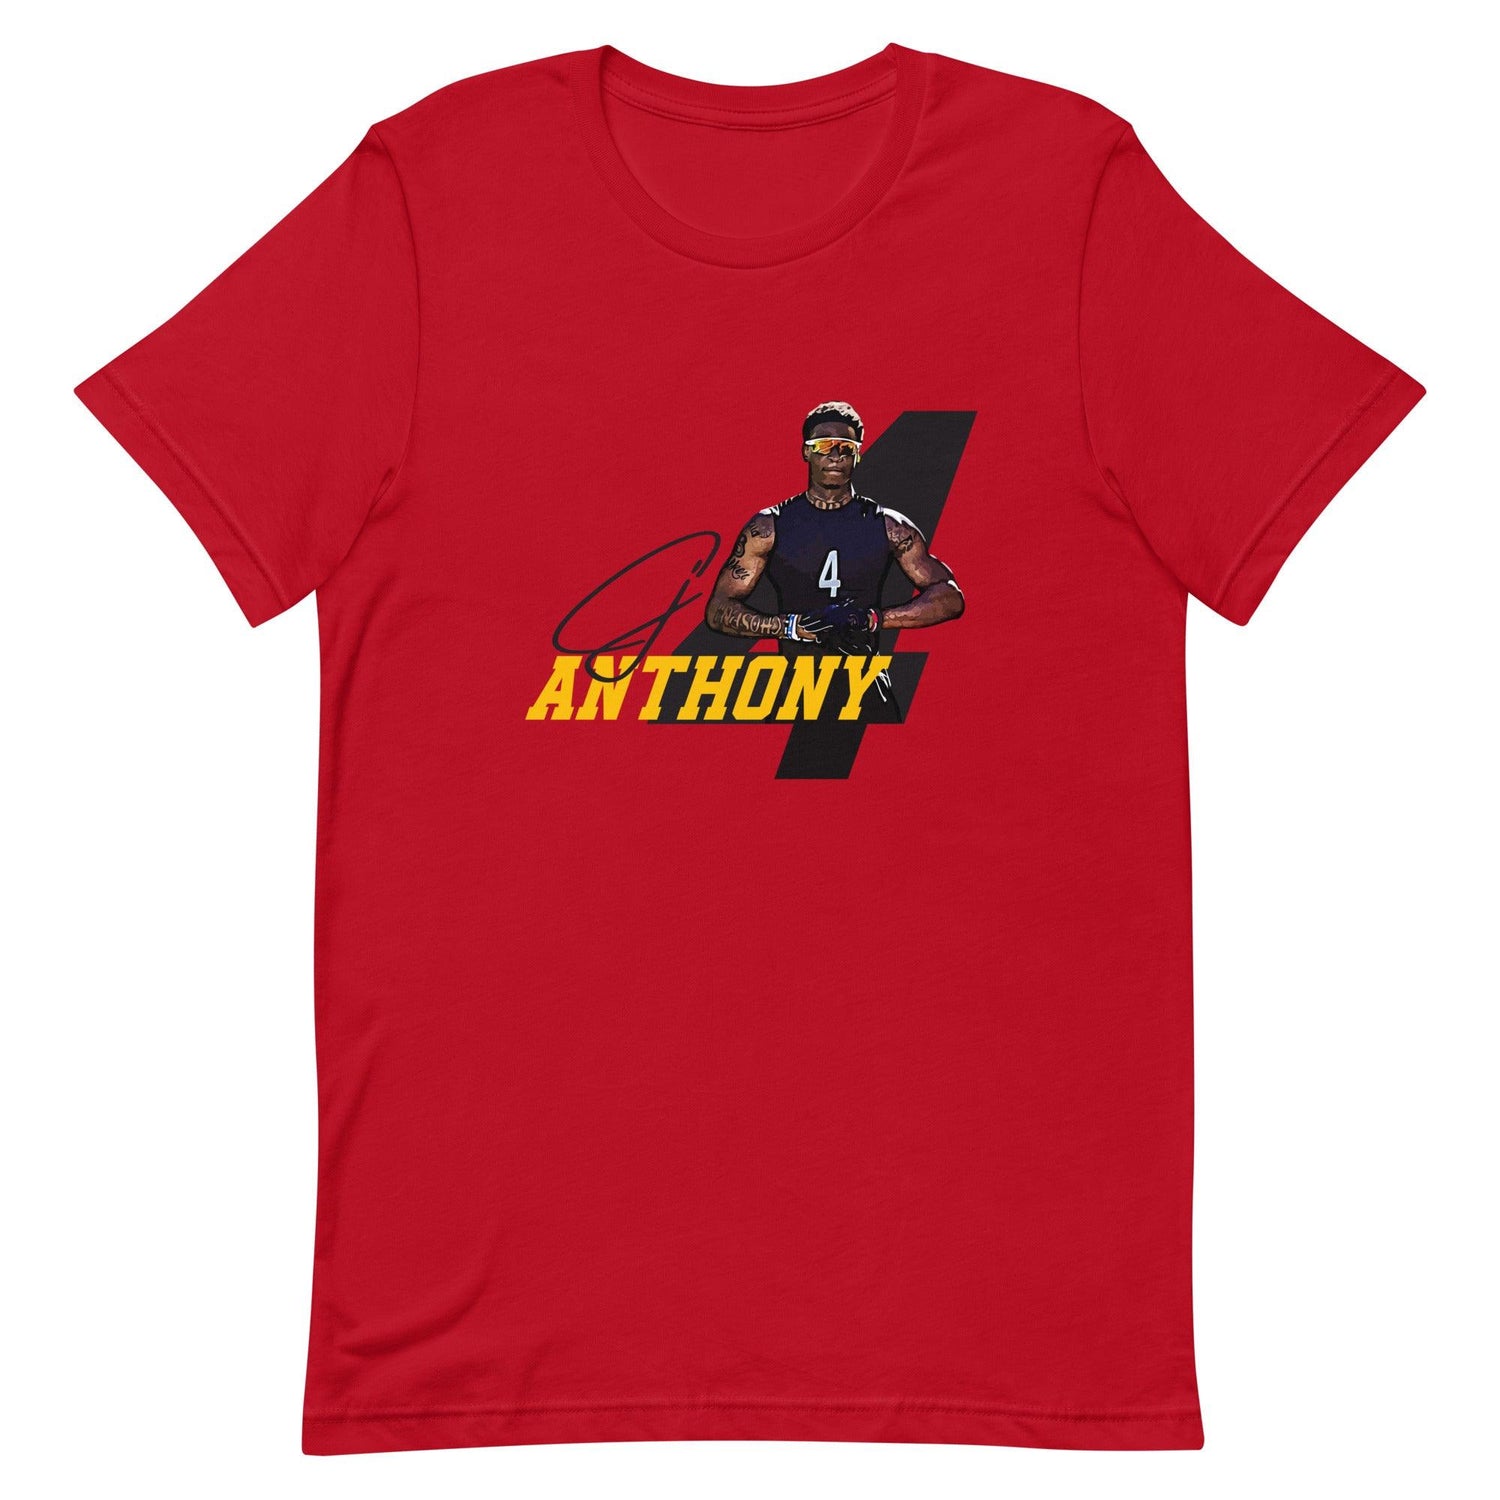 CJ Anthony "Gameday" t-shirt - Fan Arch